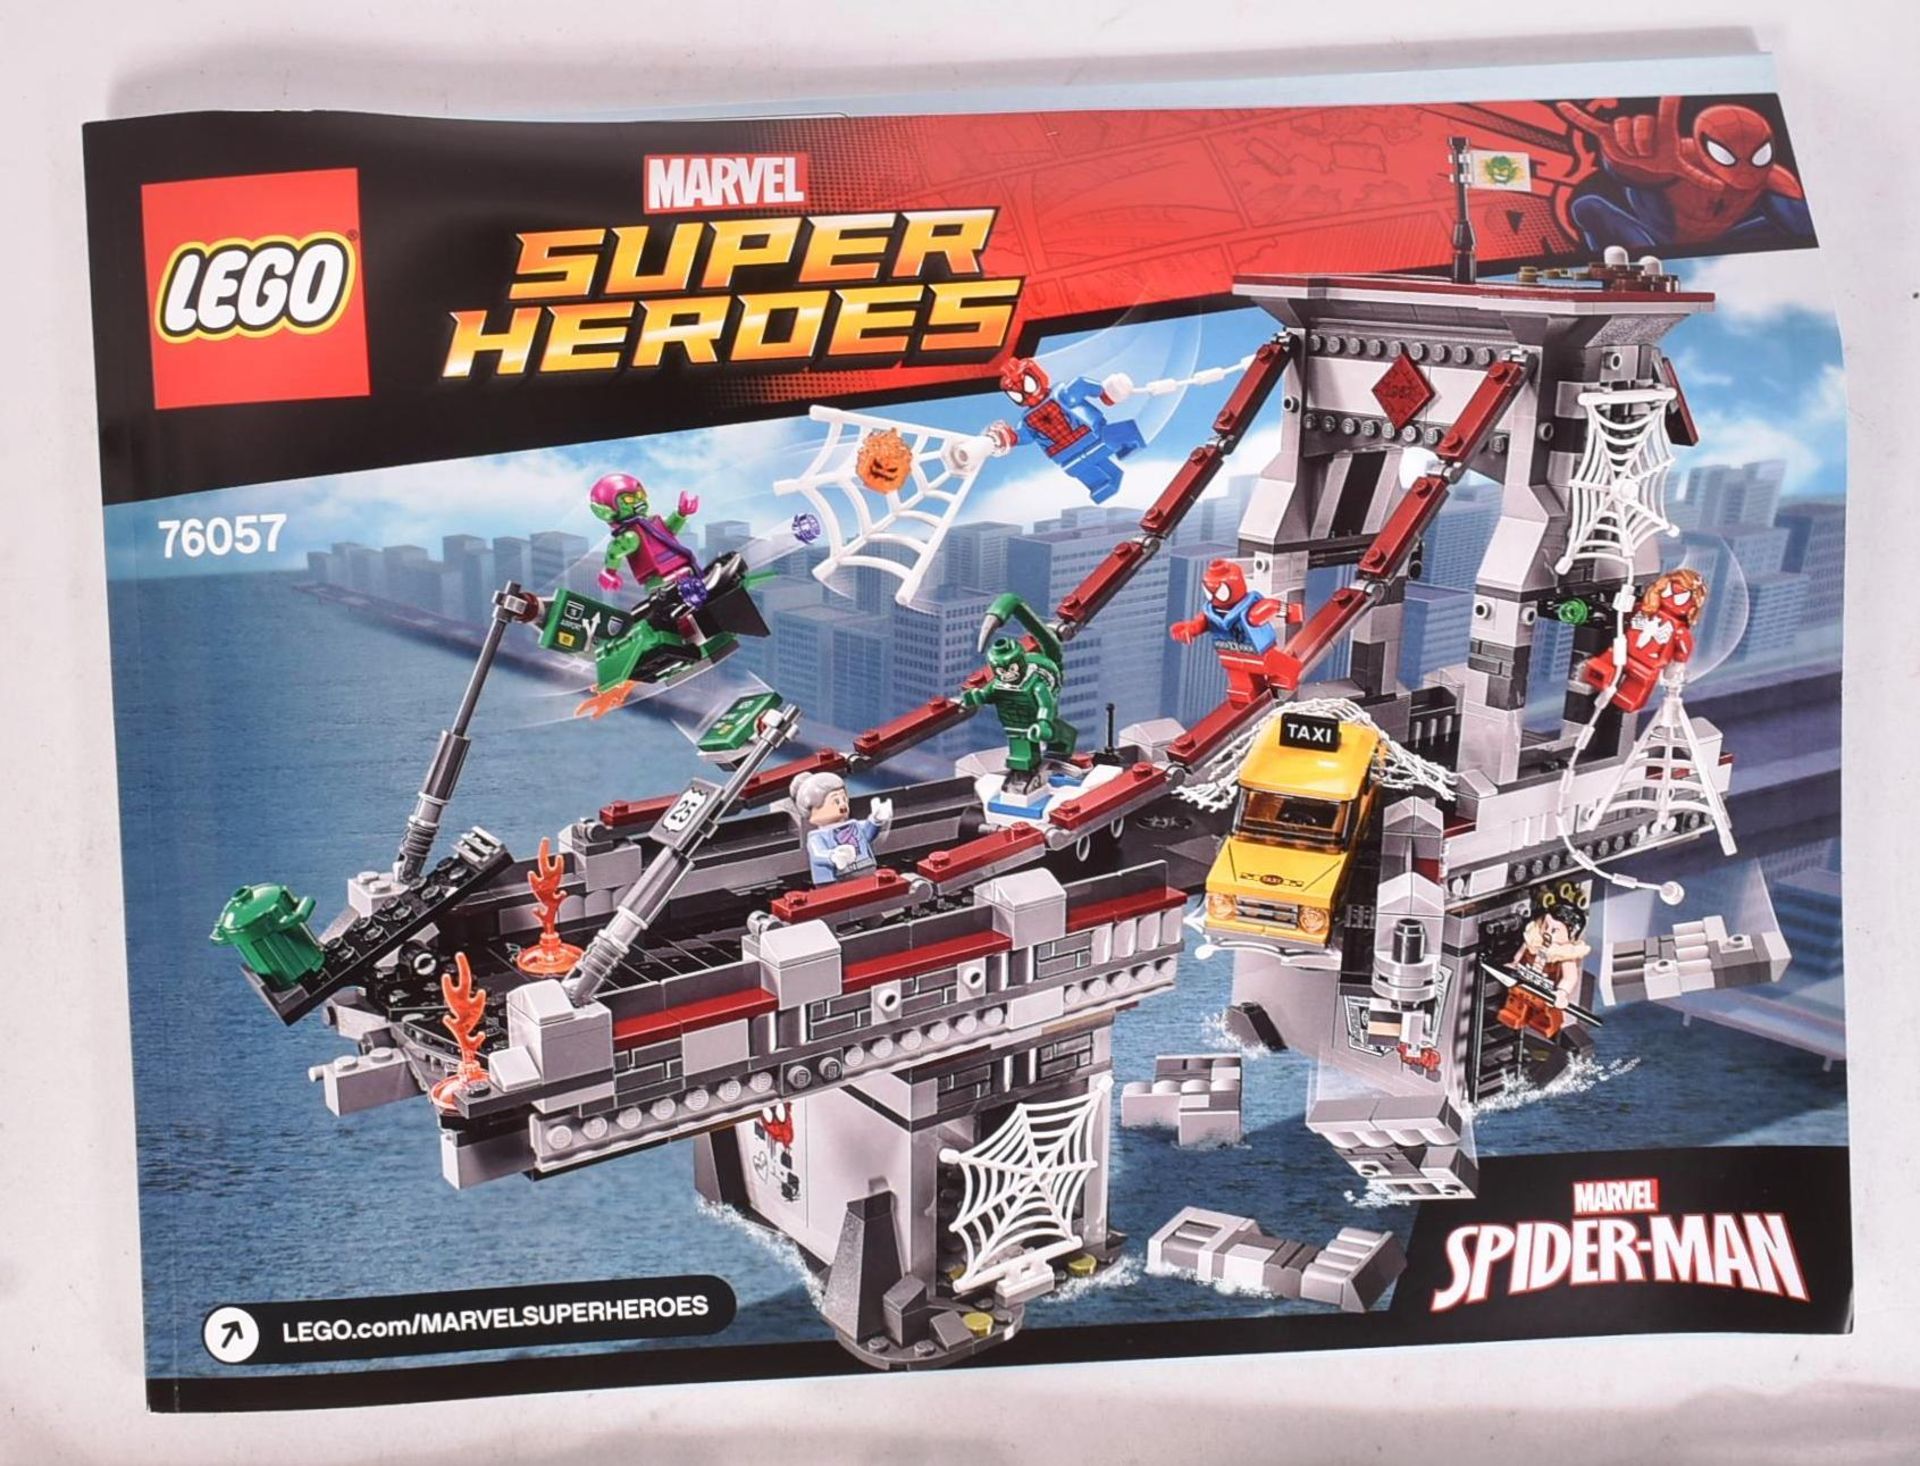 LEGO - MARVEL - 76057 - SPIDERMAN WEB WARRIORS ULTIMATE BATTLE BRIDGE - Image 3 of 5